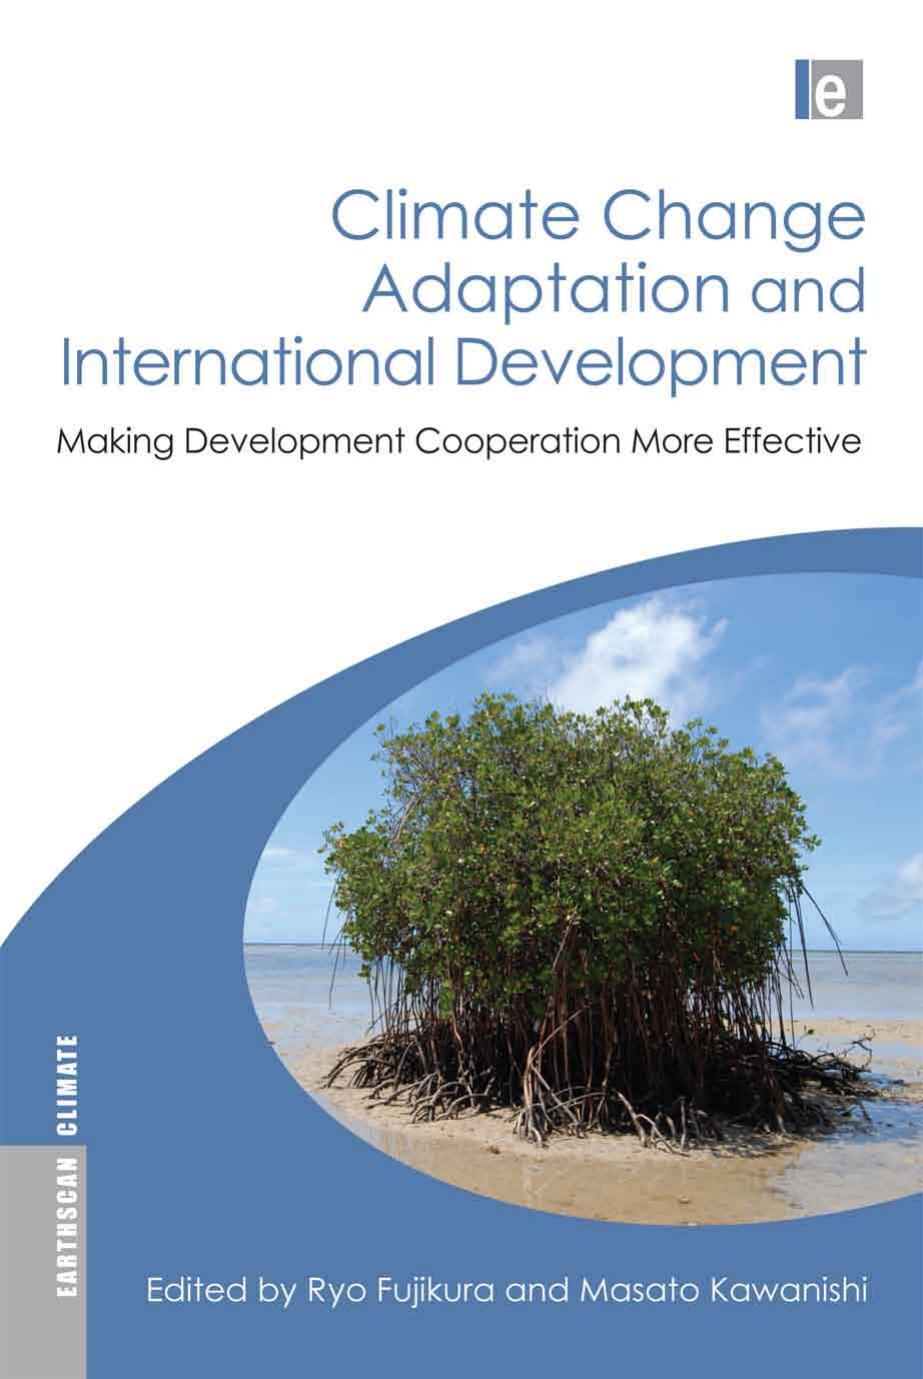 Climate Change Adaptation and International Development : Making Development Cooperation More Effective by Ryo Fujikura; Masato Kawanishi